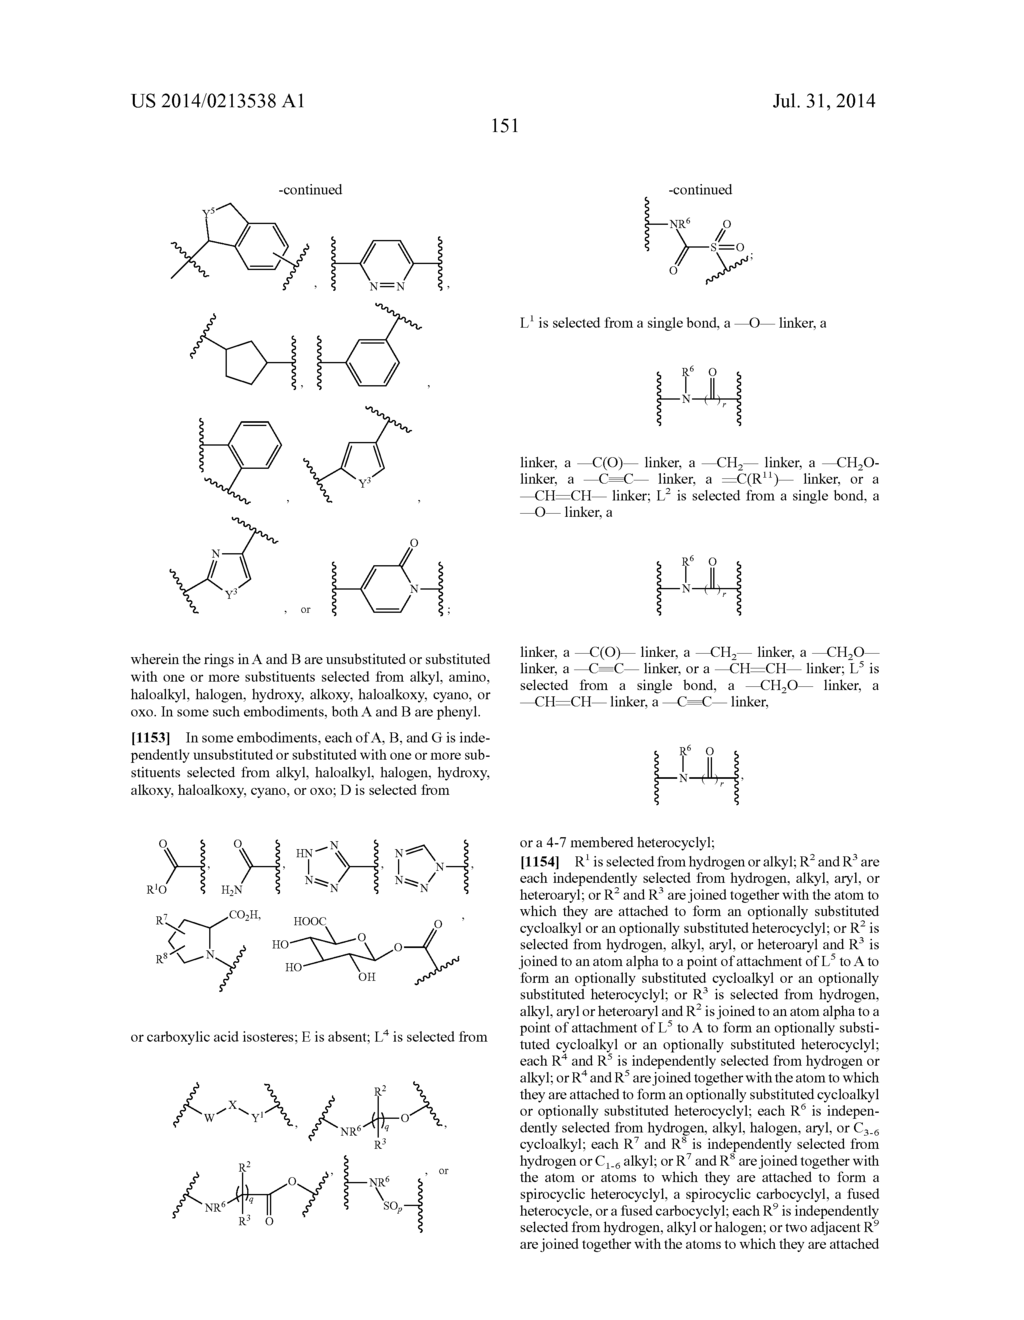 LYSOPHOSPHATIDIC ACID RECEPTOR ANTAGONISTS - diagram, schematic, and image 152